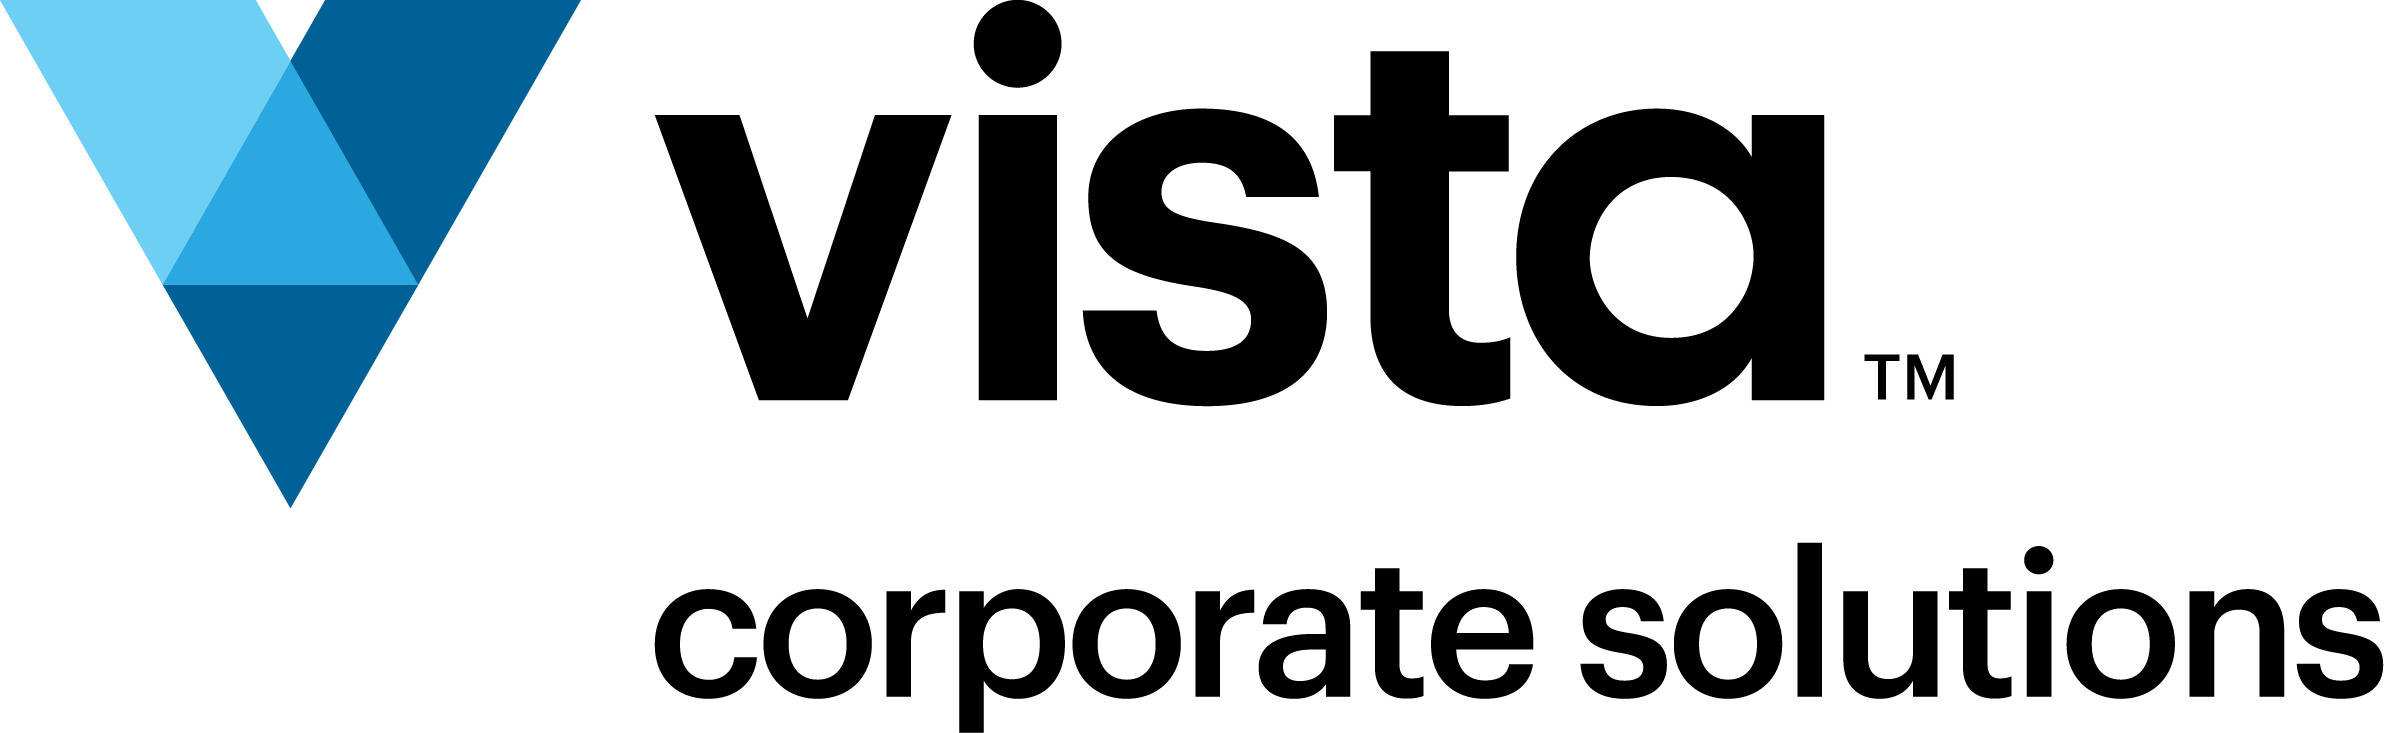 cropped-Vista_CorporateSolutions_Color